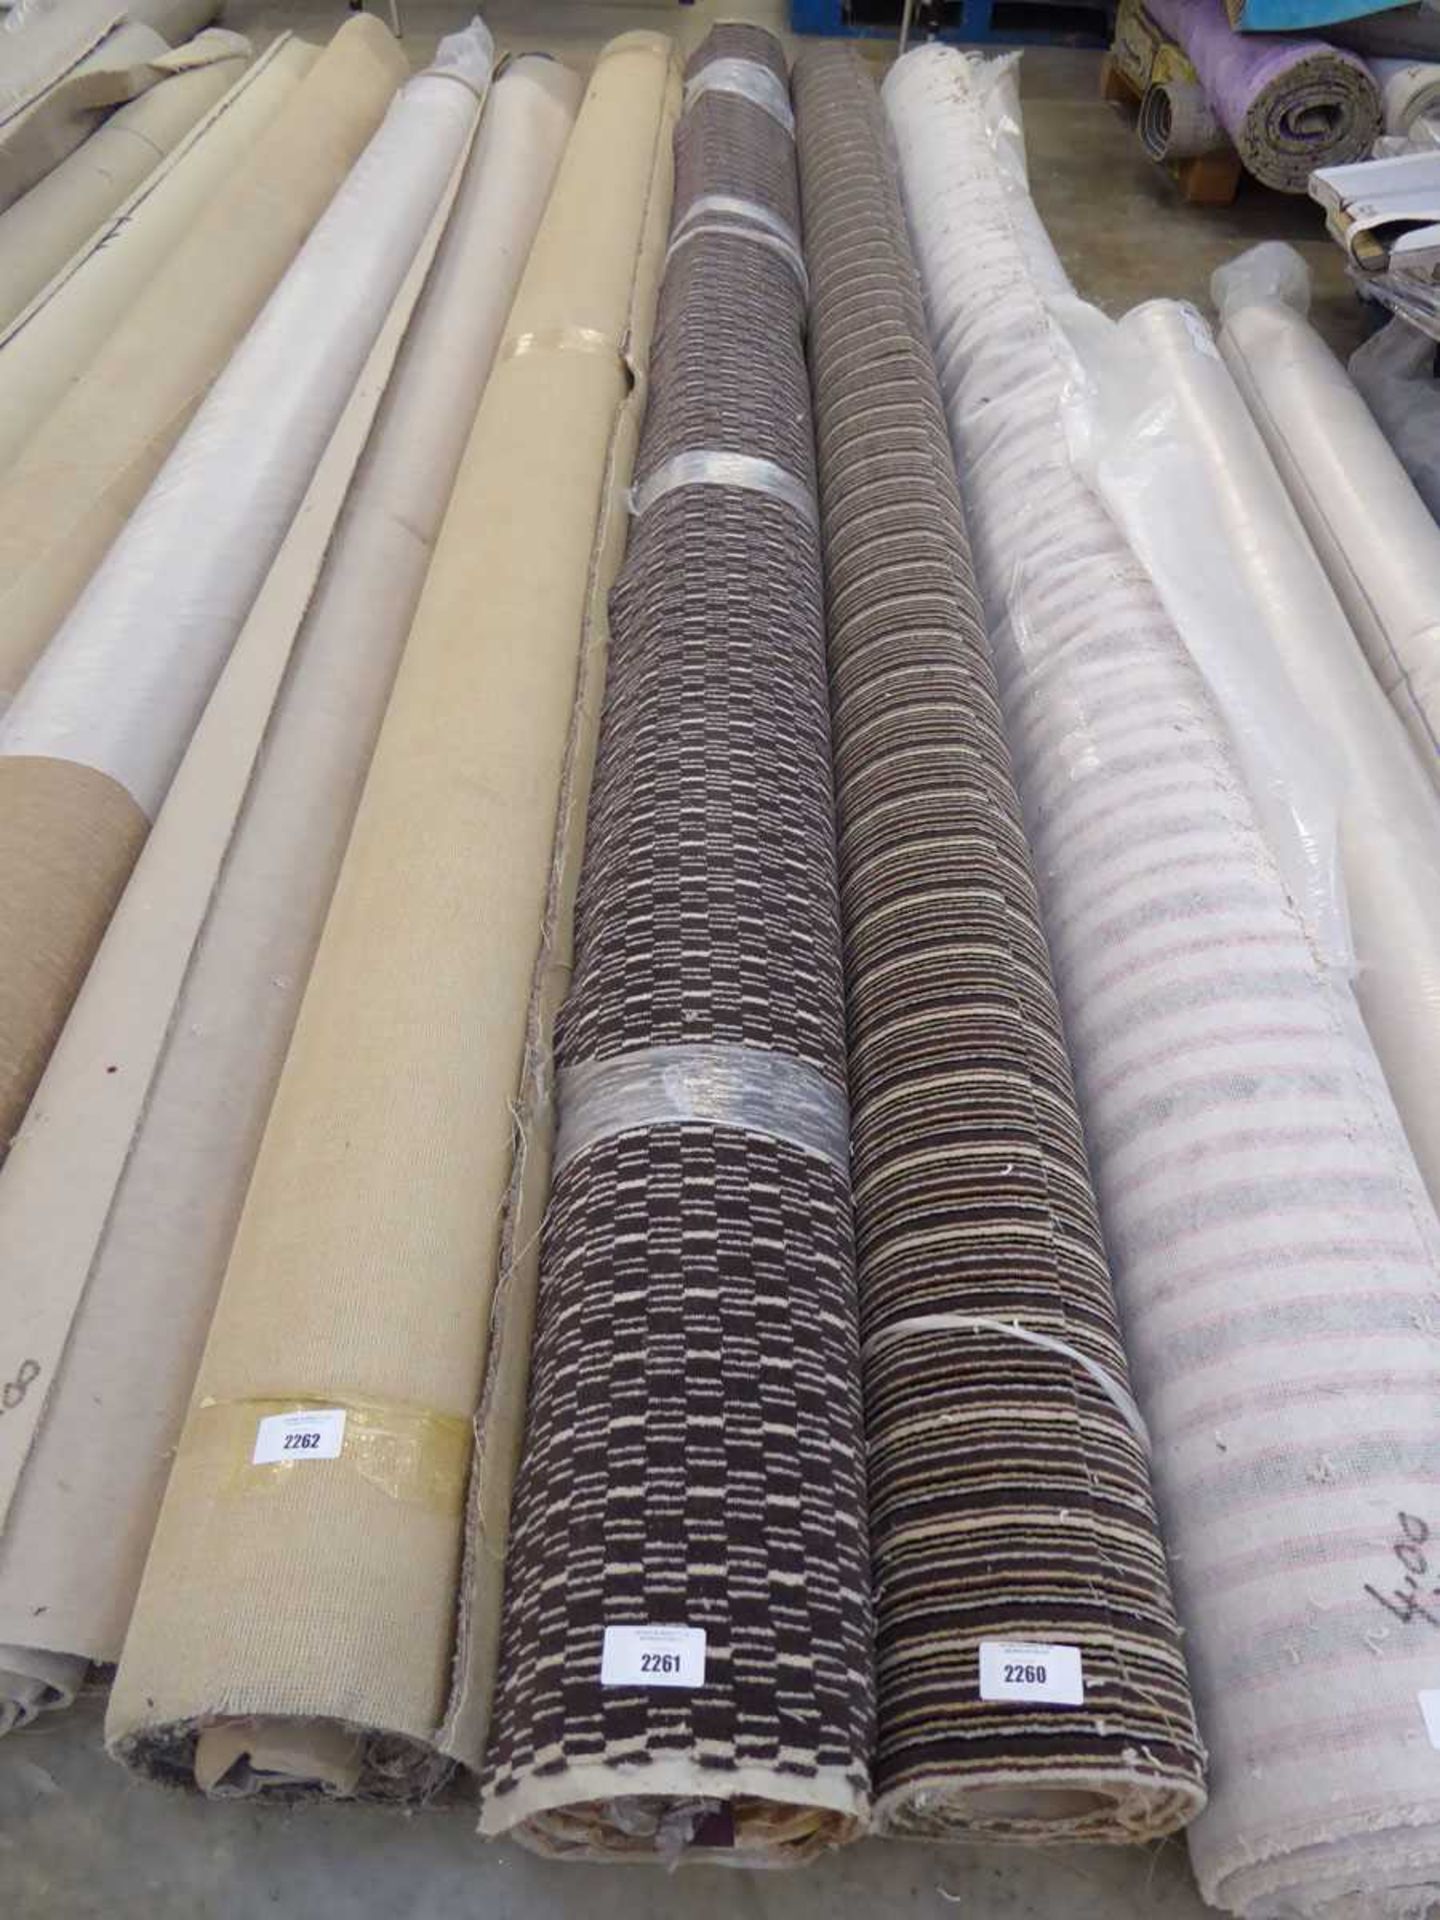 +VAT Large roll of brown and beige patterned carpet